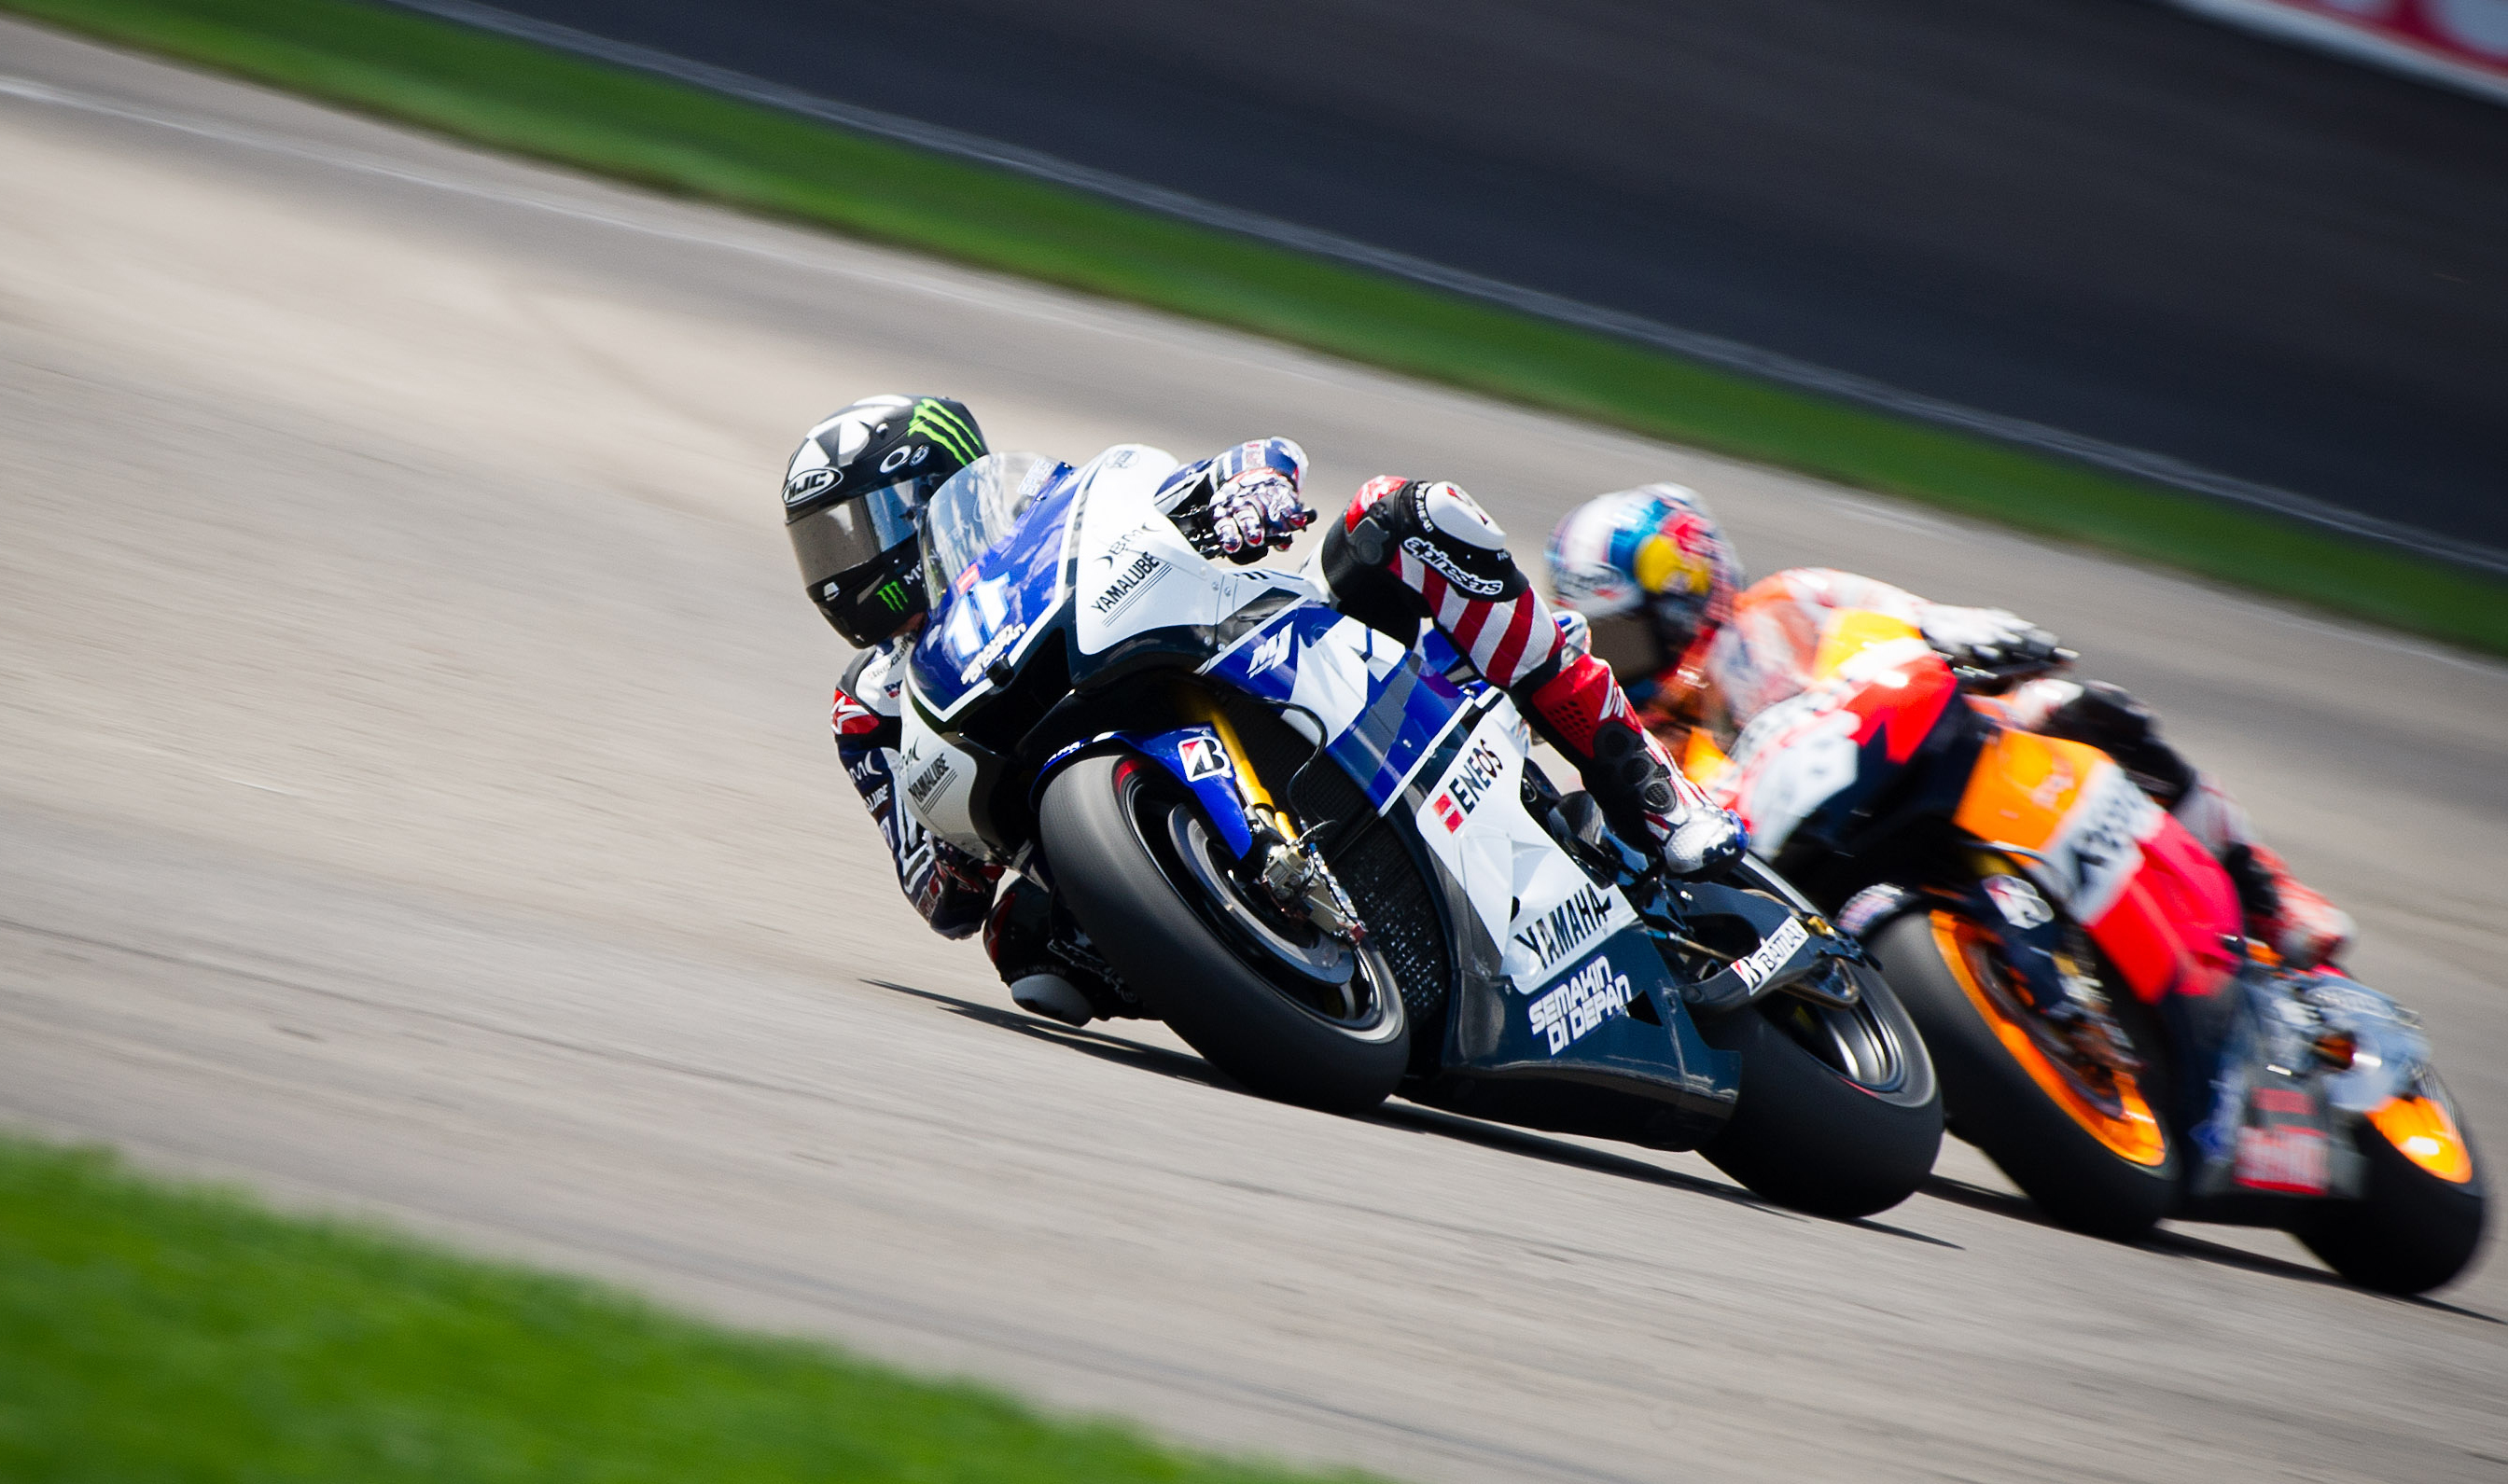 Motorcycle Yamaha MotoGP race racing wallpaper 2688x1591 112894